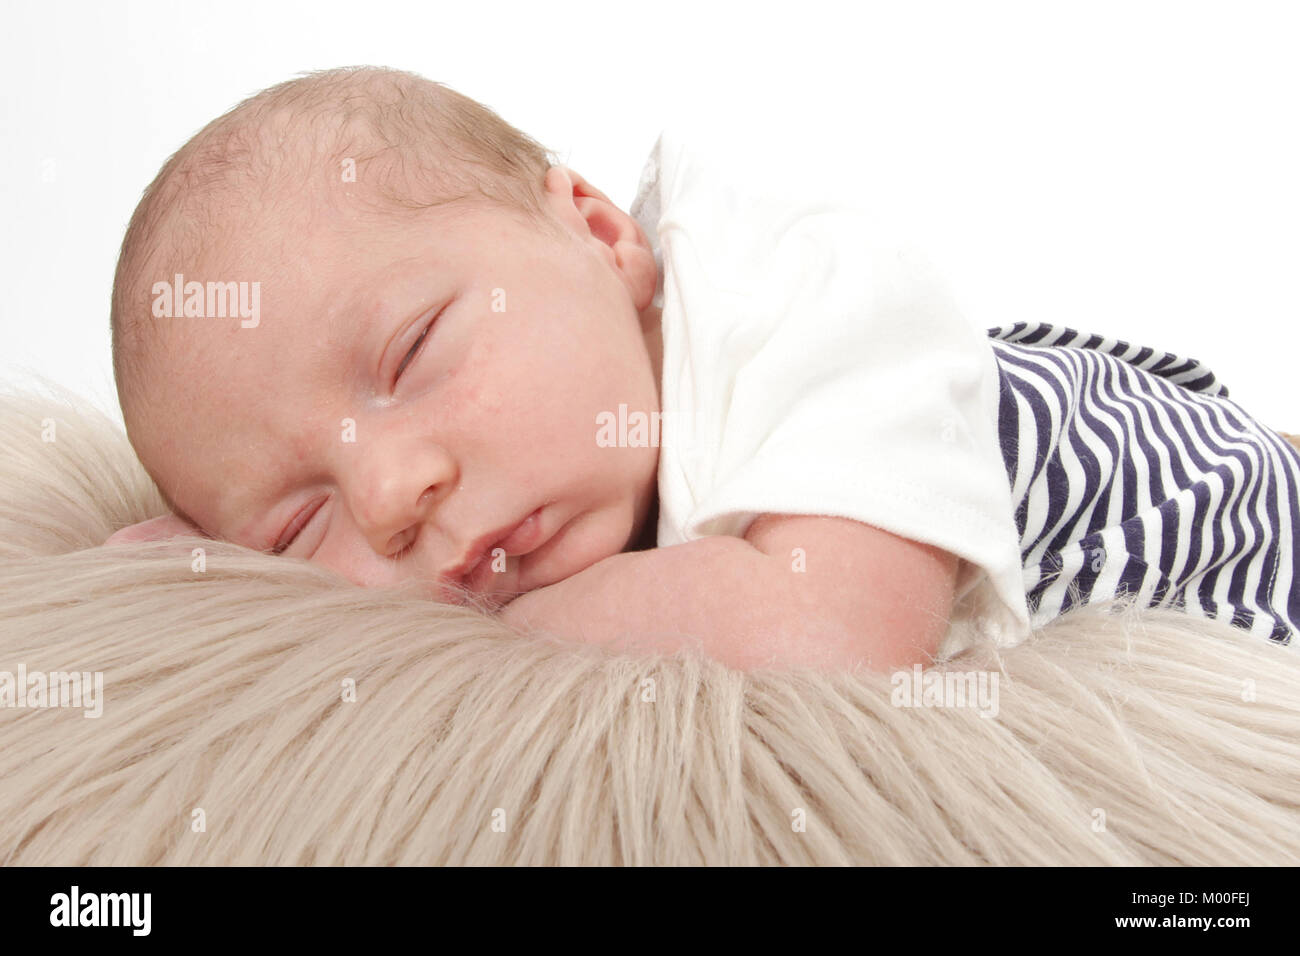 Beau Bebe De La Semaine 4 Le Garcon Endormi La Sieste Photo Stock Alamy